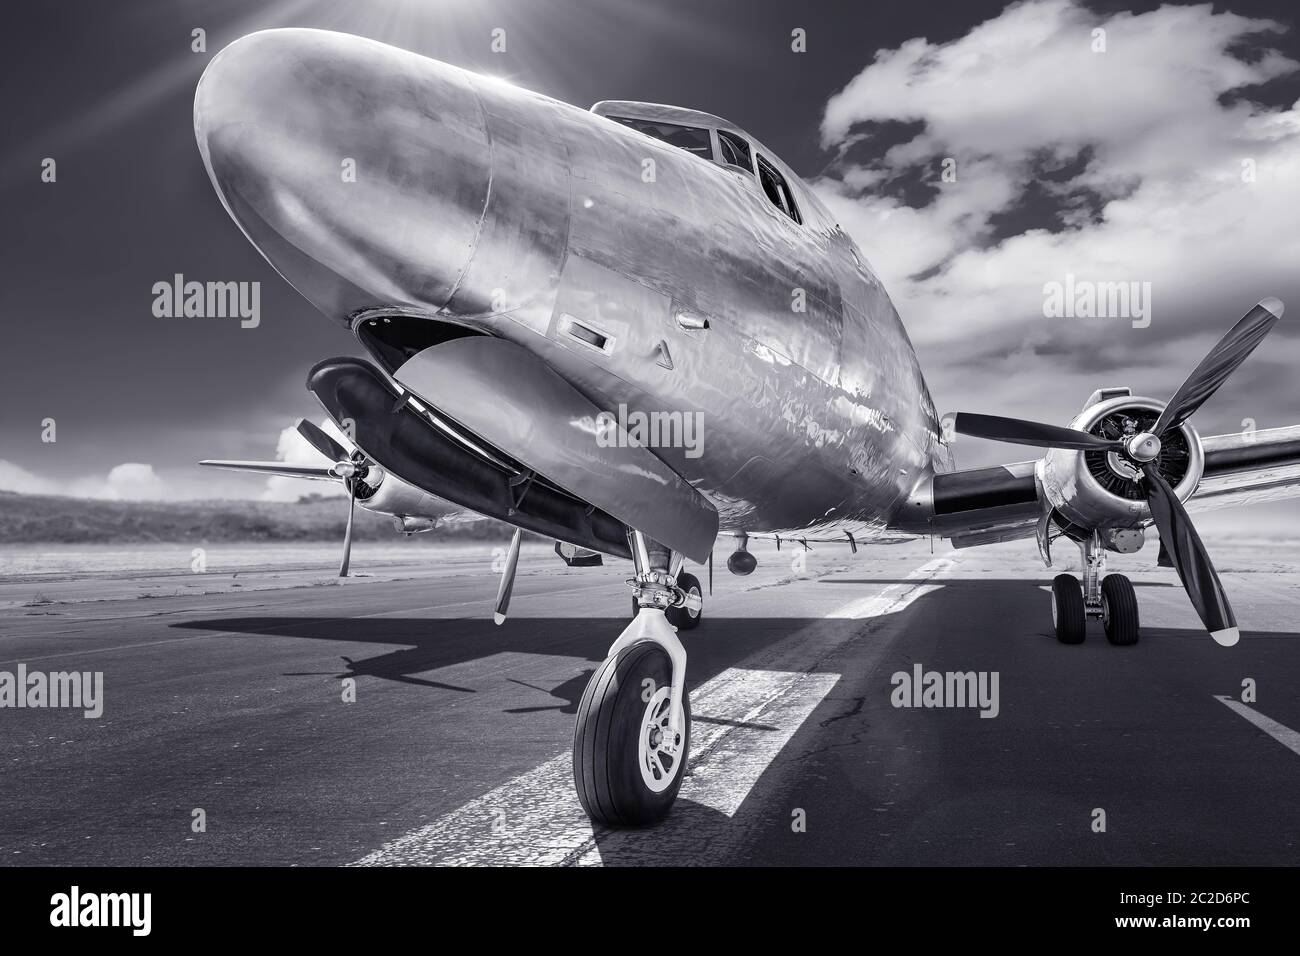 historical aircraft on a runway Stock Photo